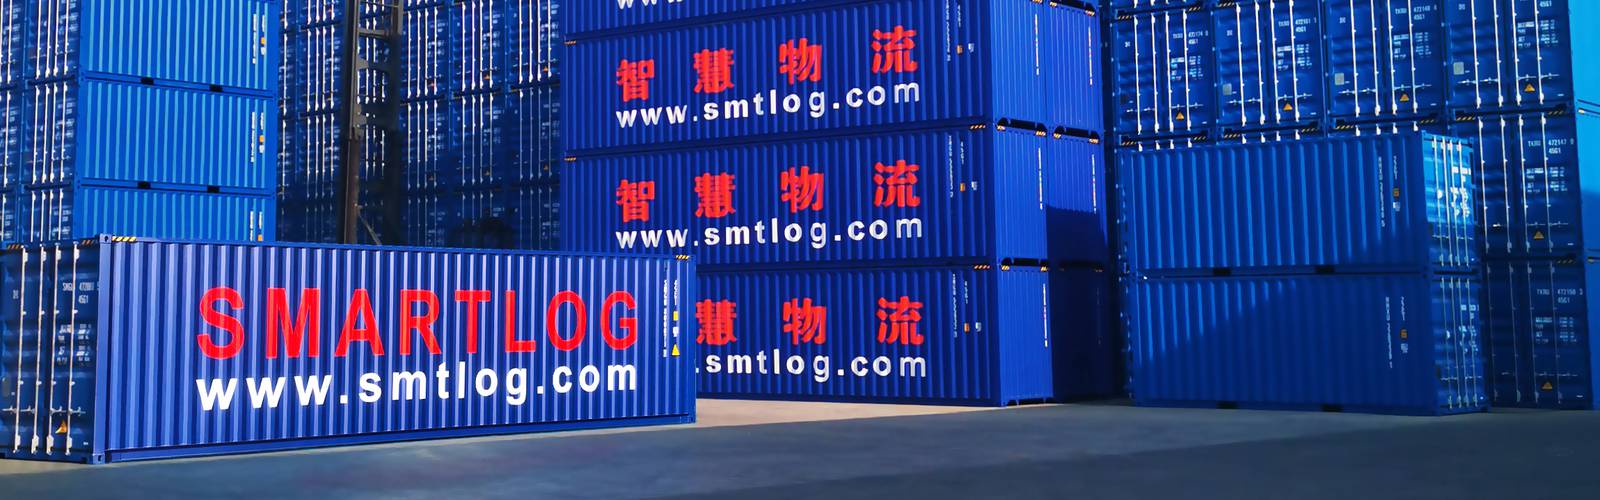 SMARTLOG一家国际运输和物流公司